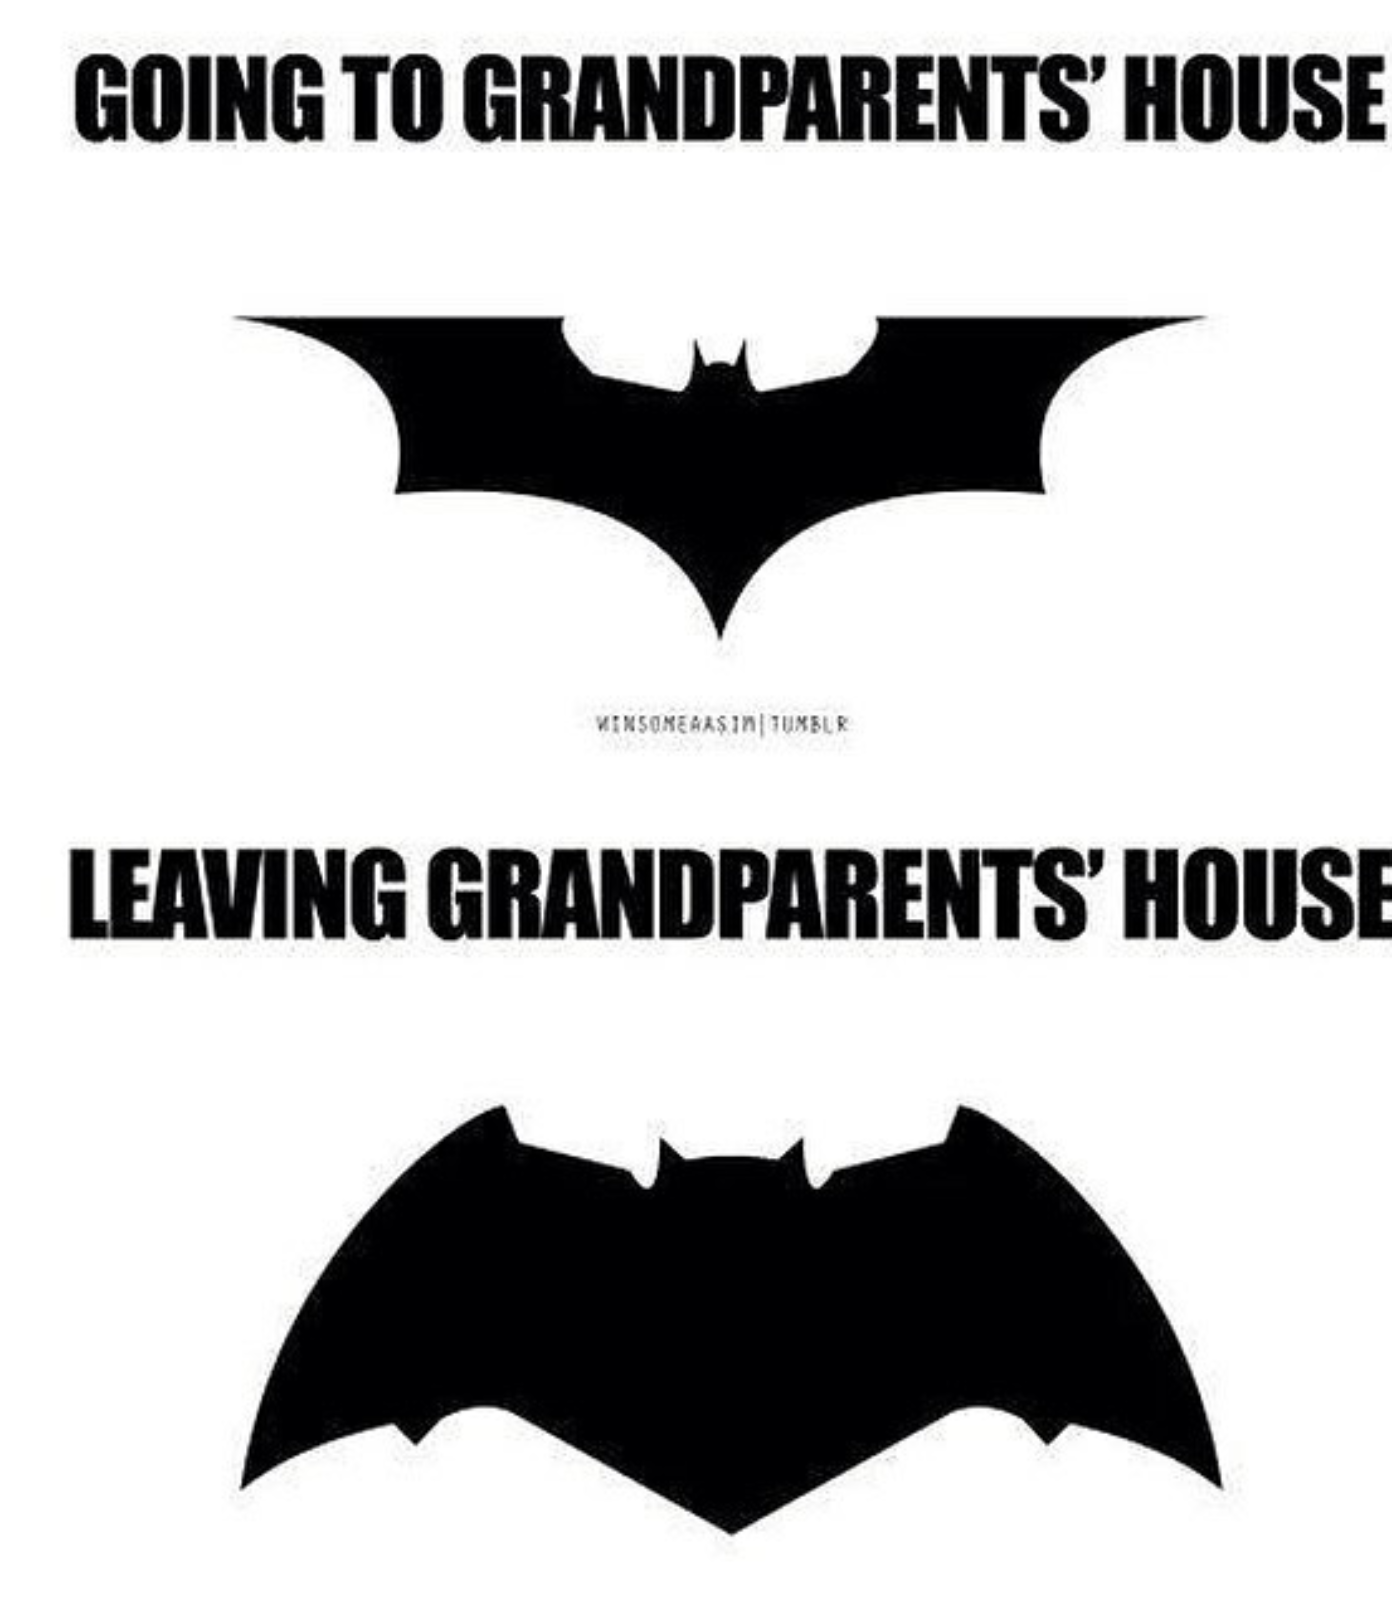 batman nananana meme - Going To Grandparents' House Winsorlarsintole Leaving Grandparents' House